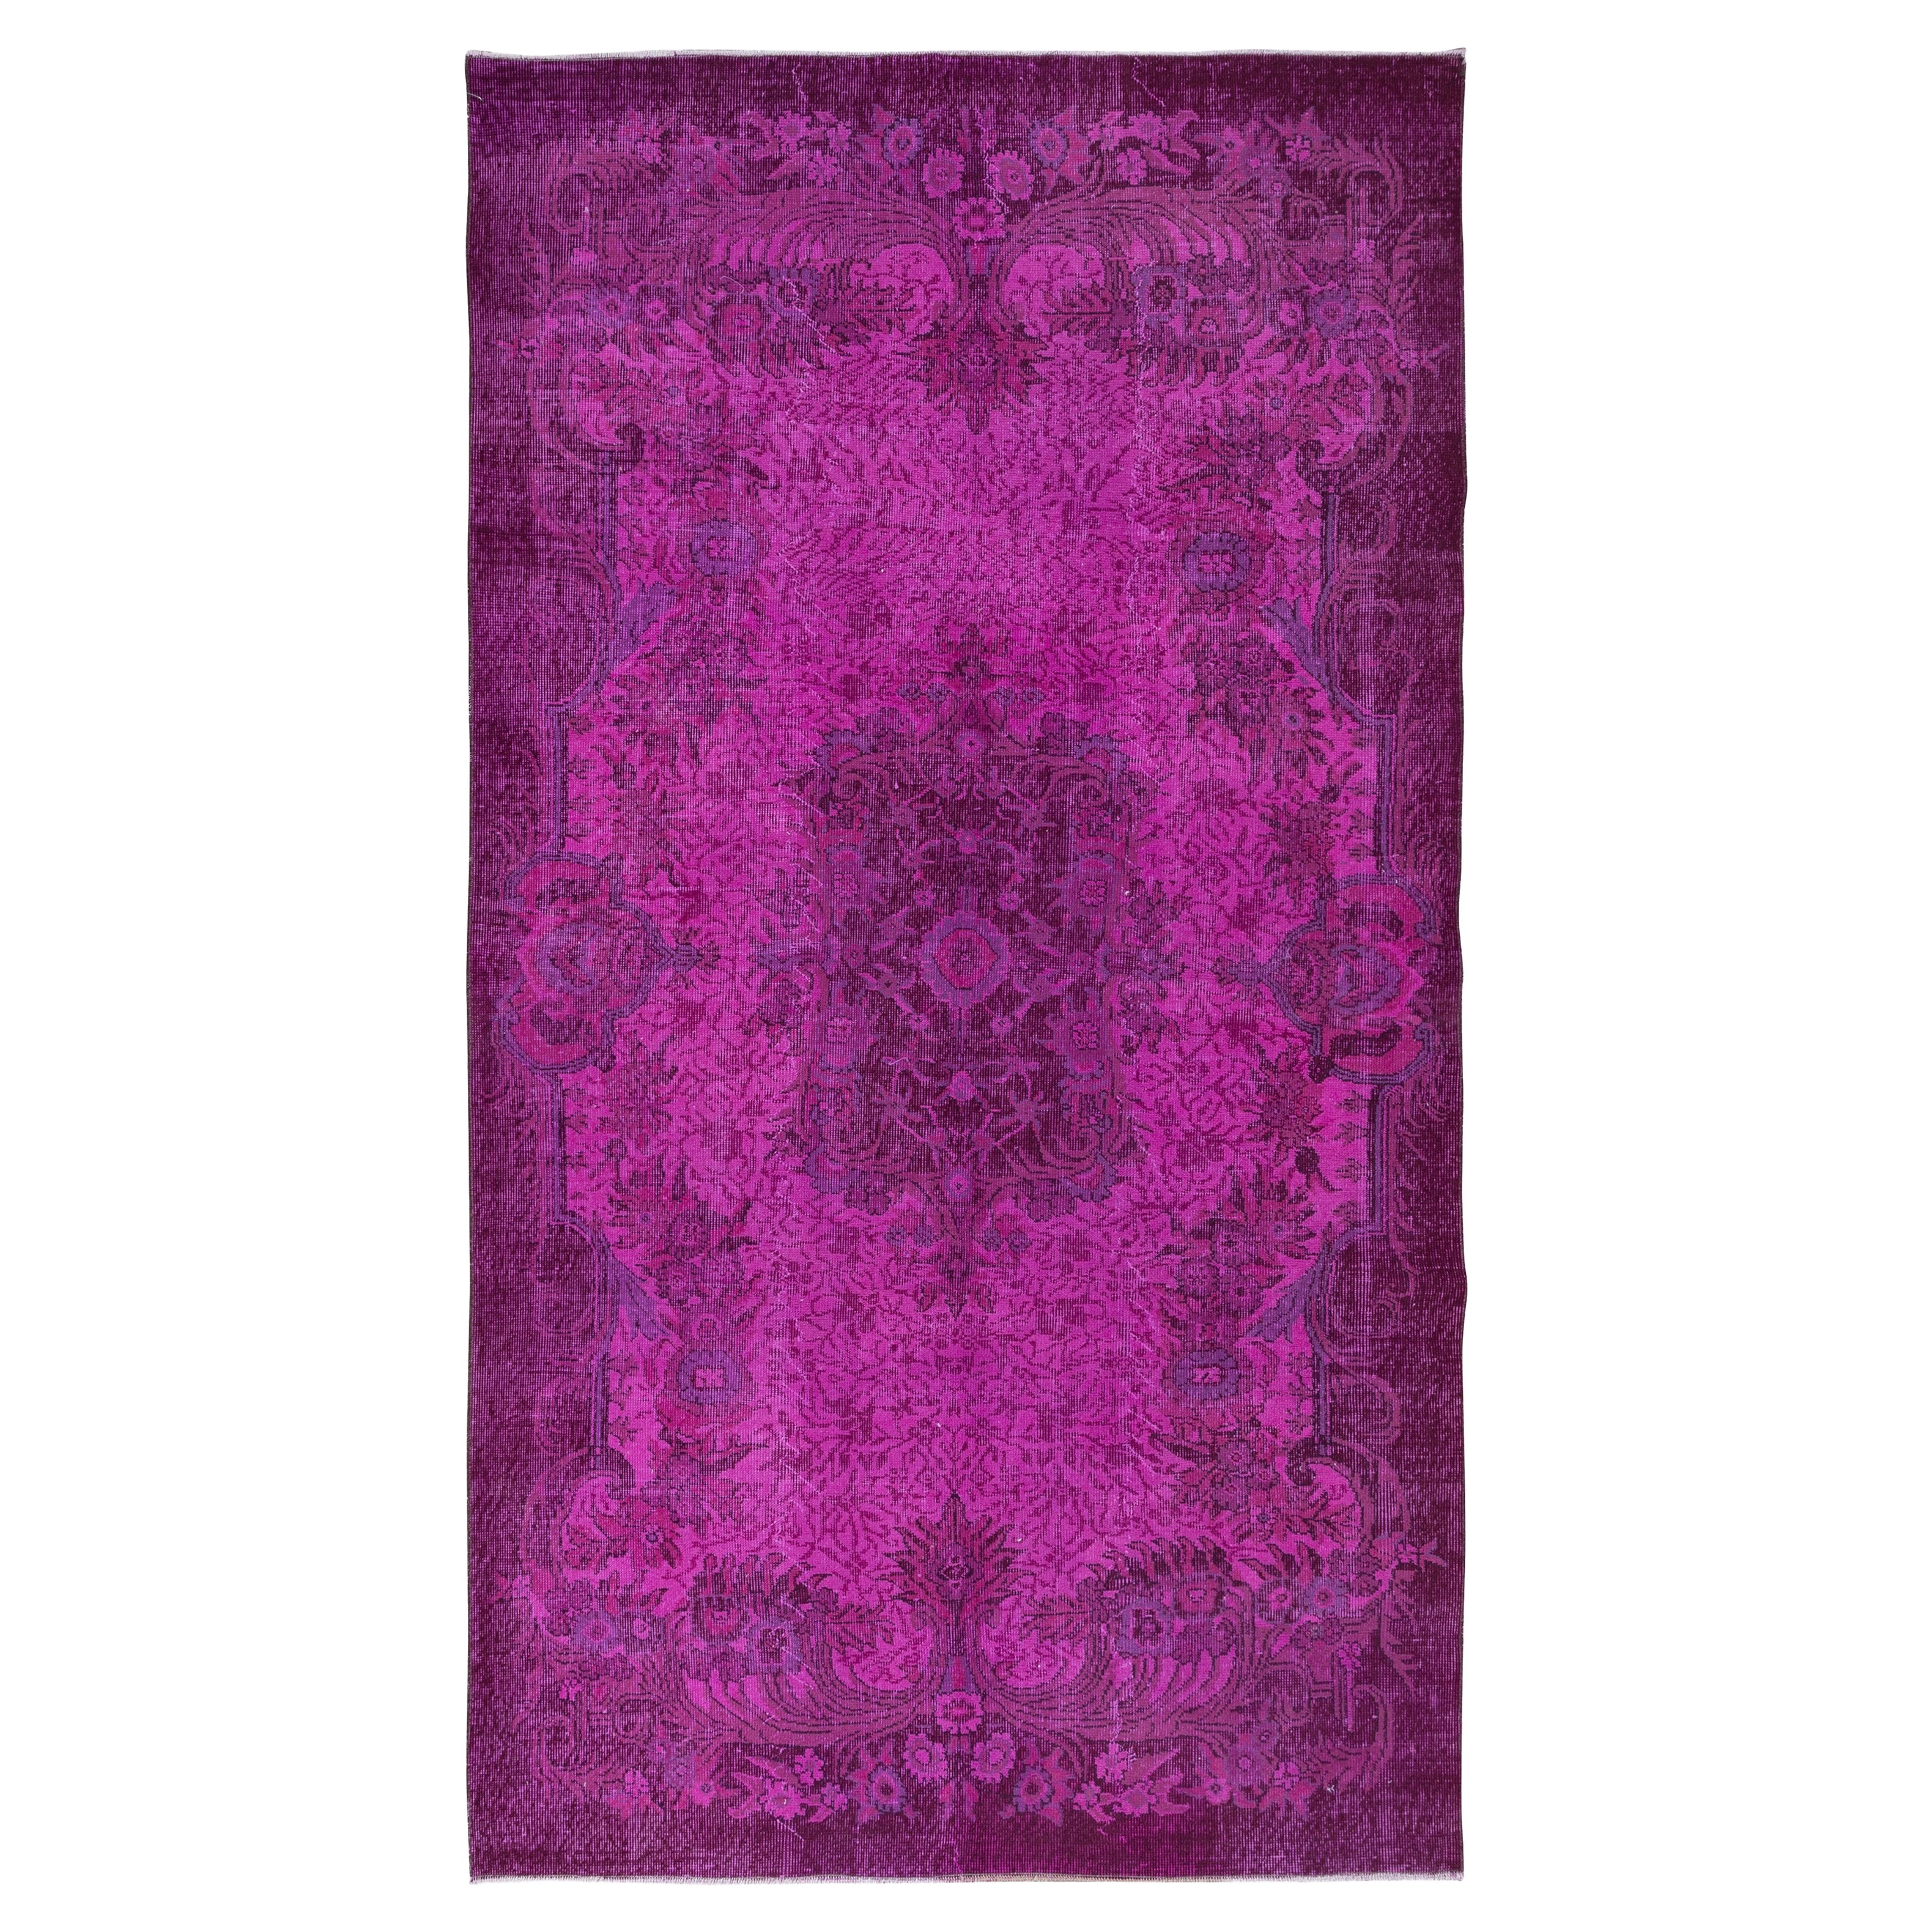 5.4x9.7 Ft Splendid Handmade Pink Area Rug, Modern Turkish Living Room Carpet For Sale